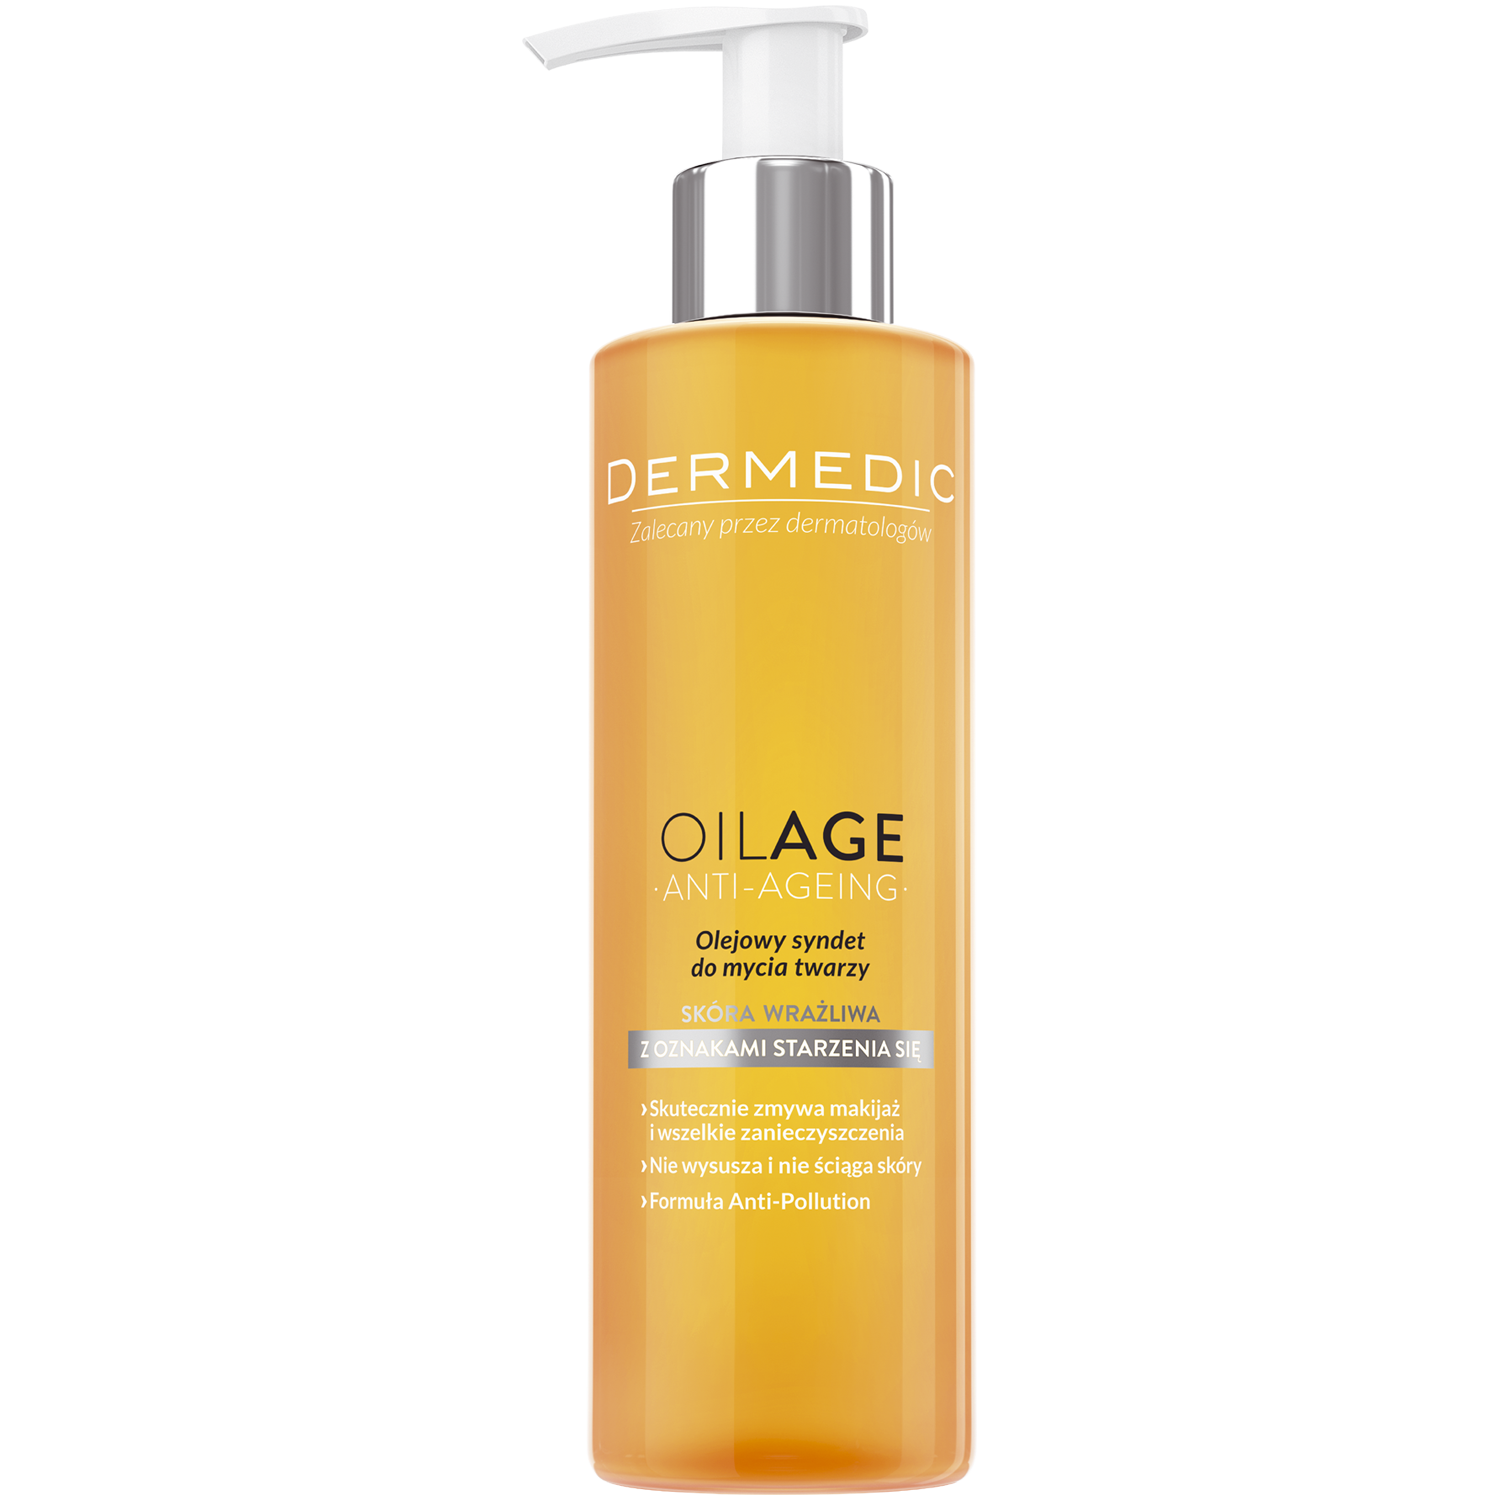 Dermedic Oilage масло для умывания синдет, 200 мл очищающее масло для лица для сухой кожи dermedic oilage 200 мл